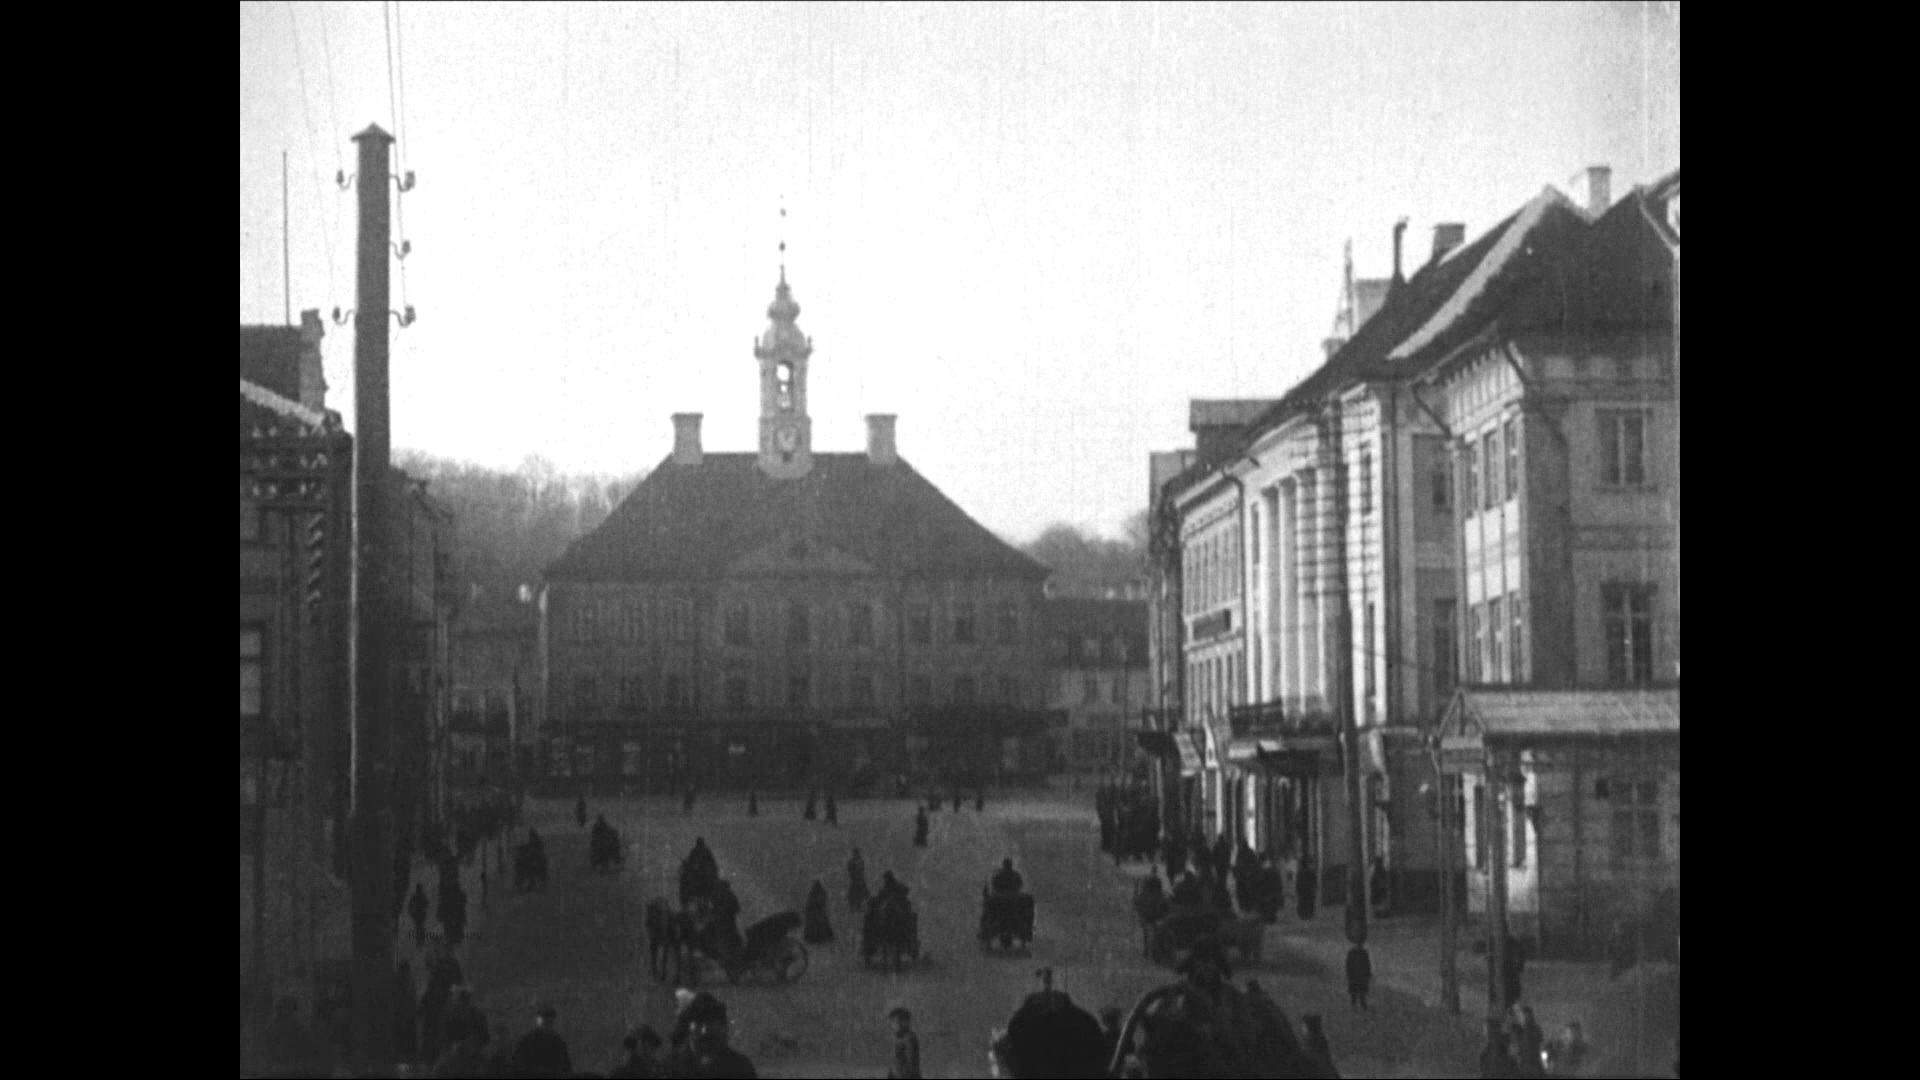 Film "Tartu city and surroundings" 0:01:53.159